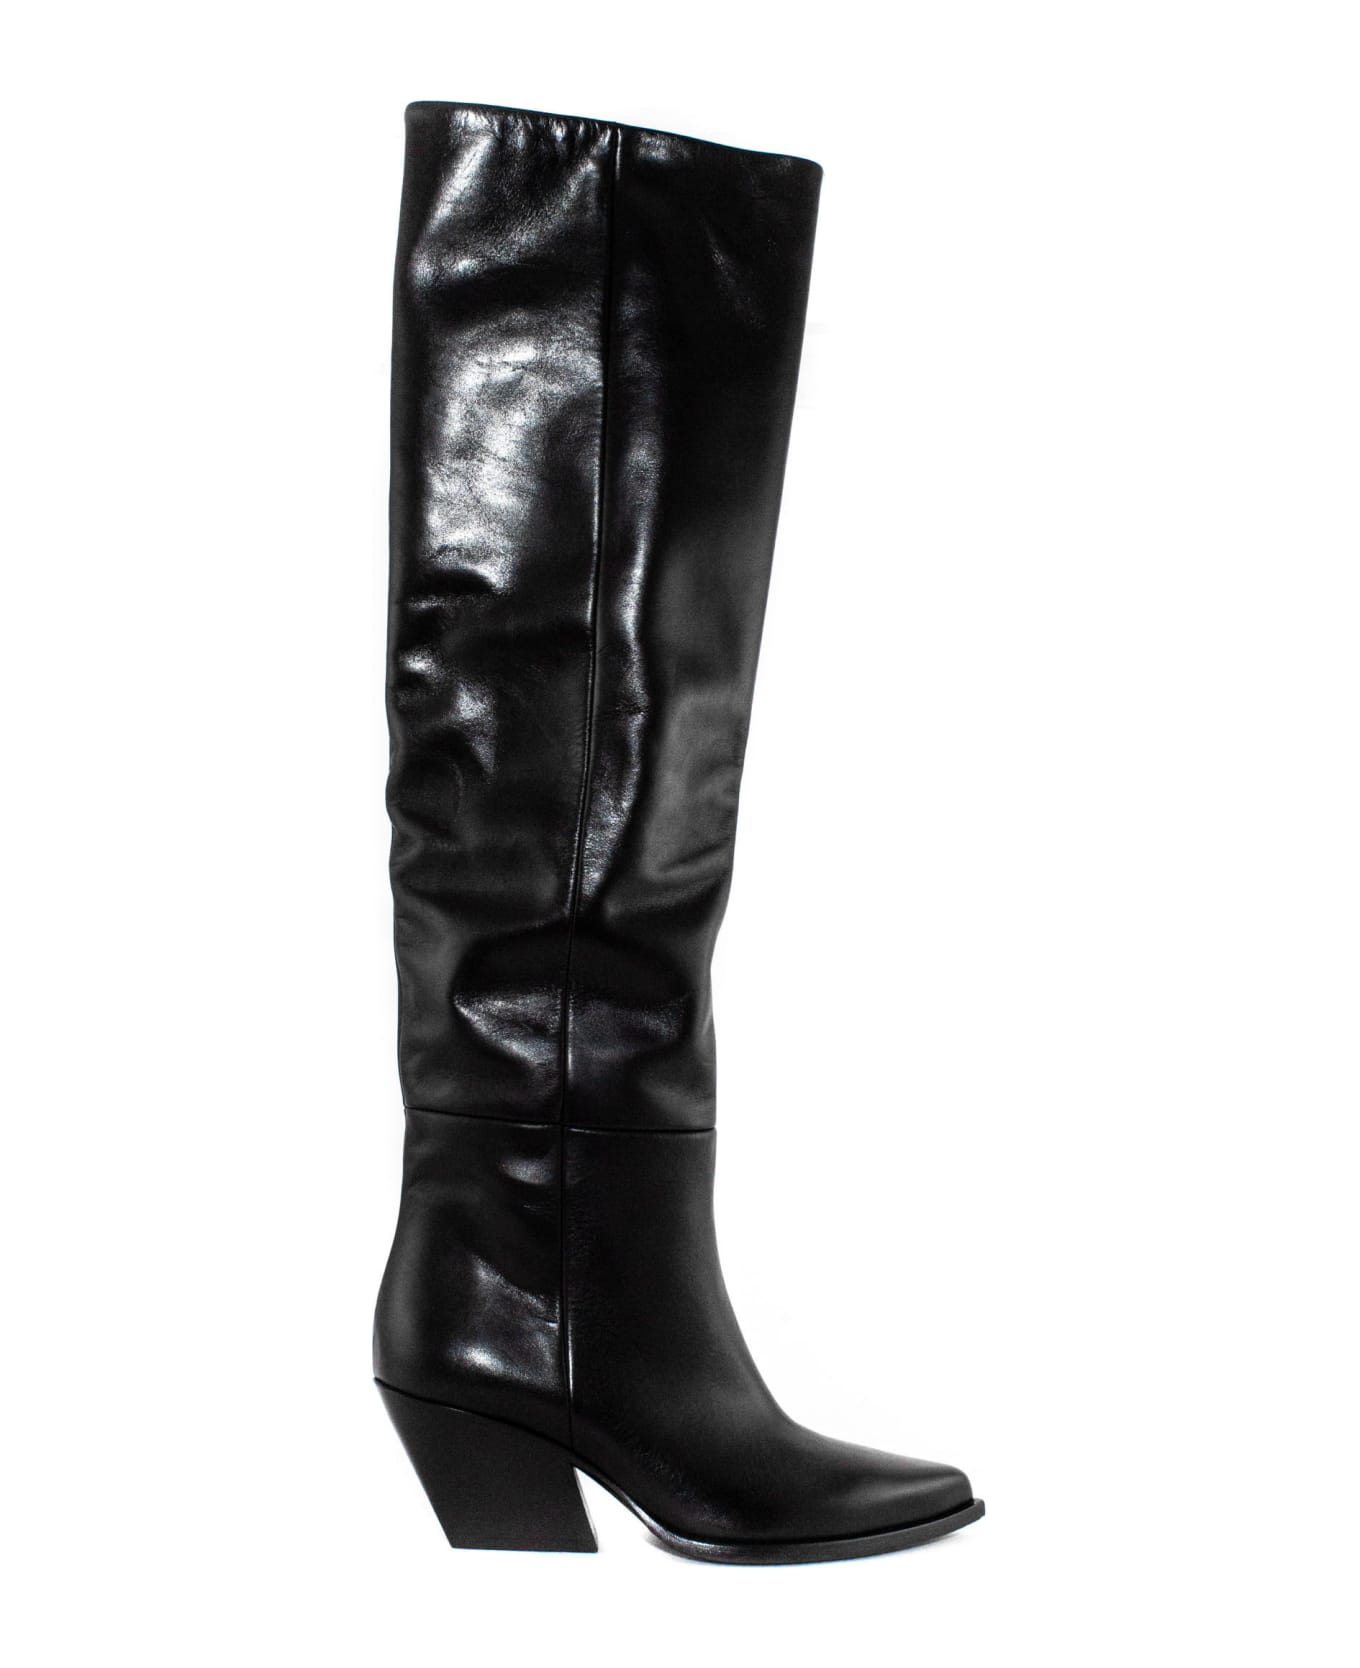 Elena Iachi Black Leather Knee Boots - Black